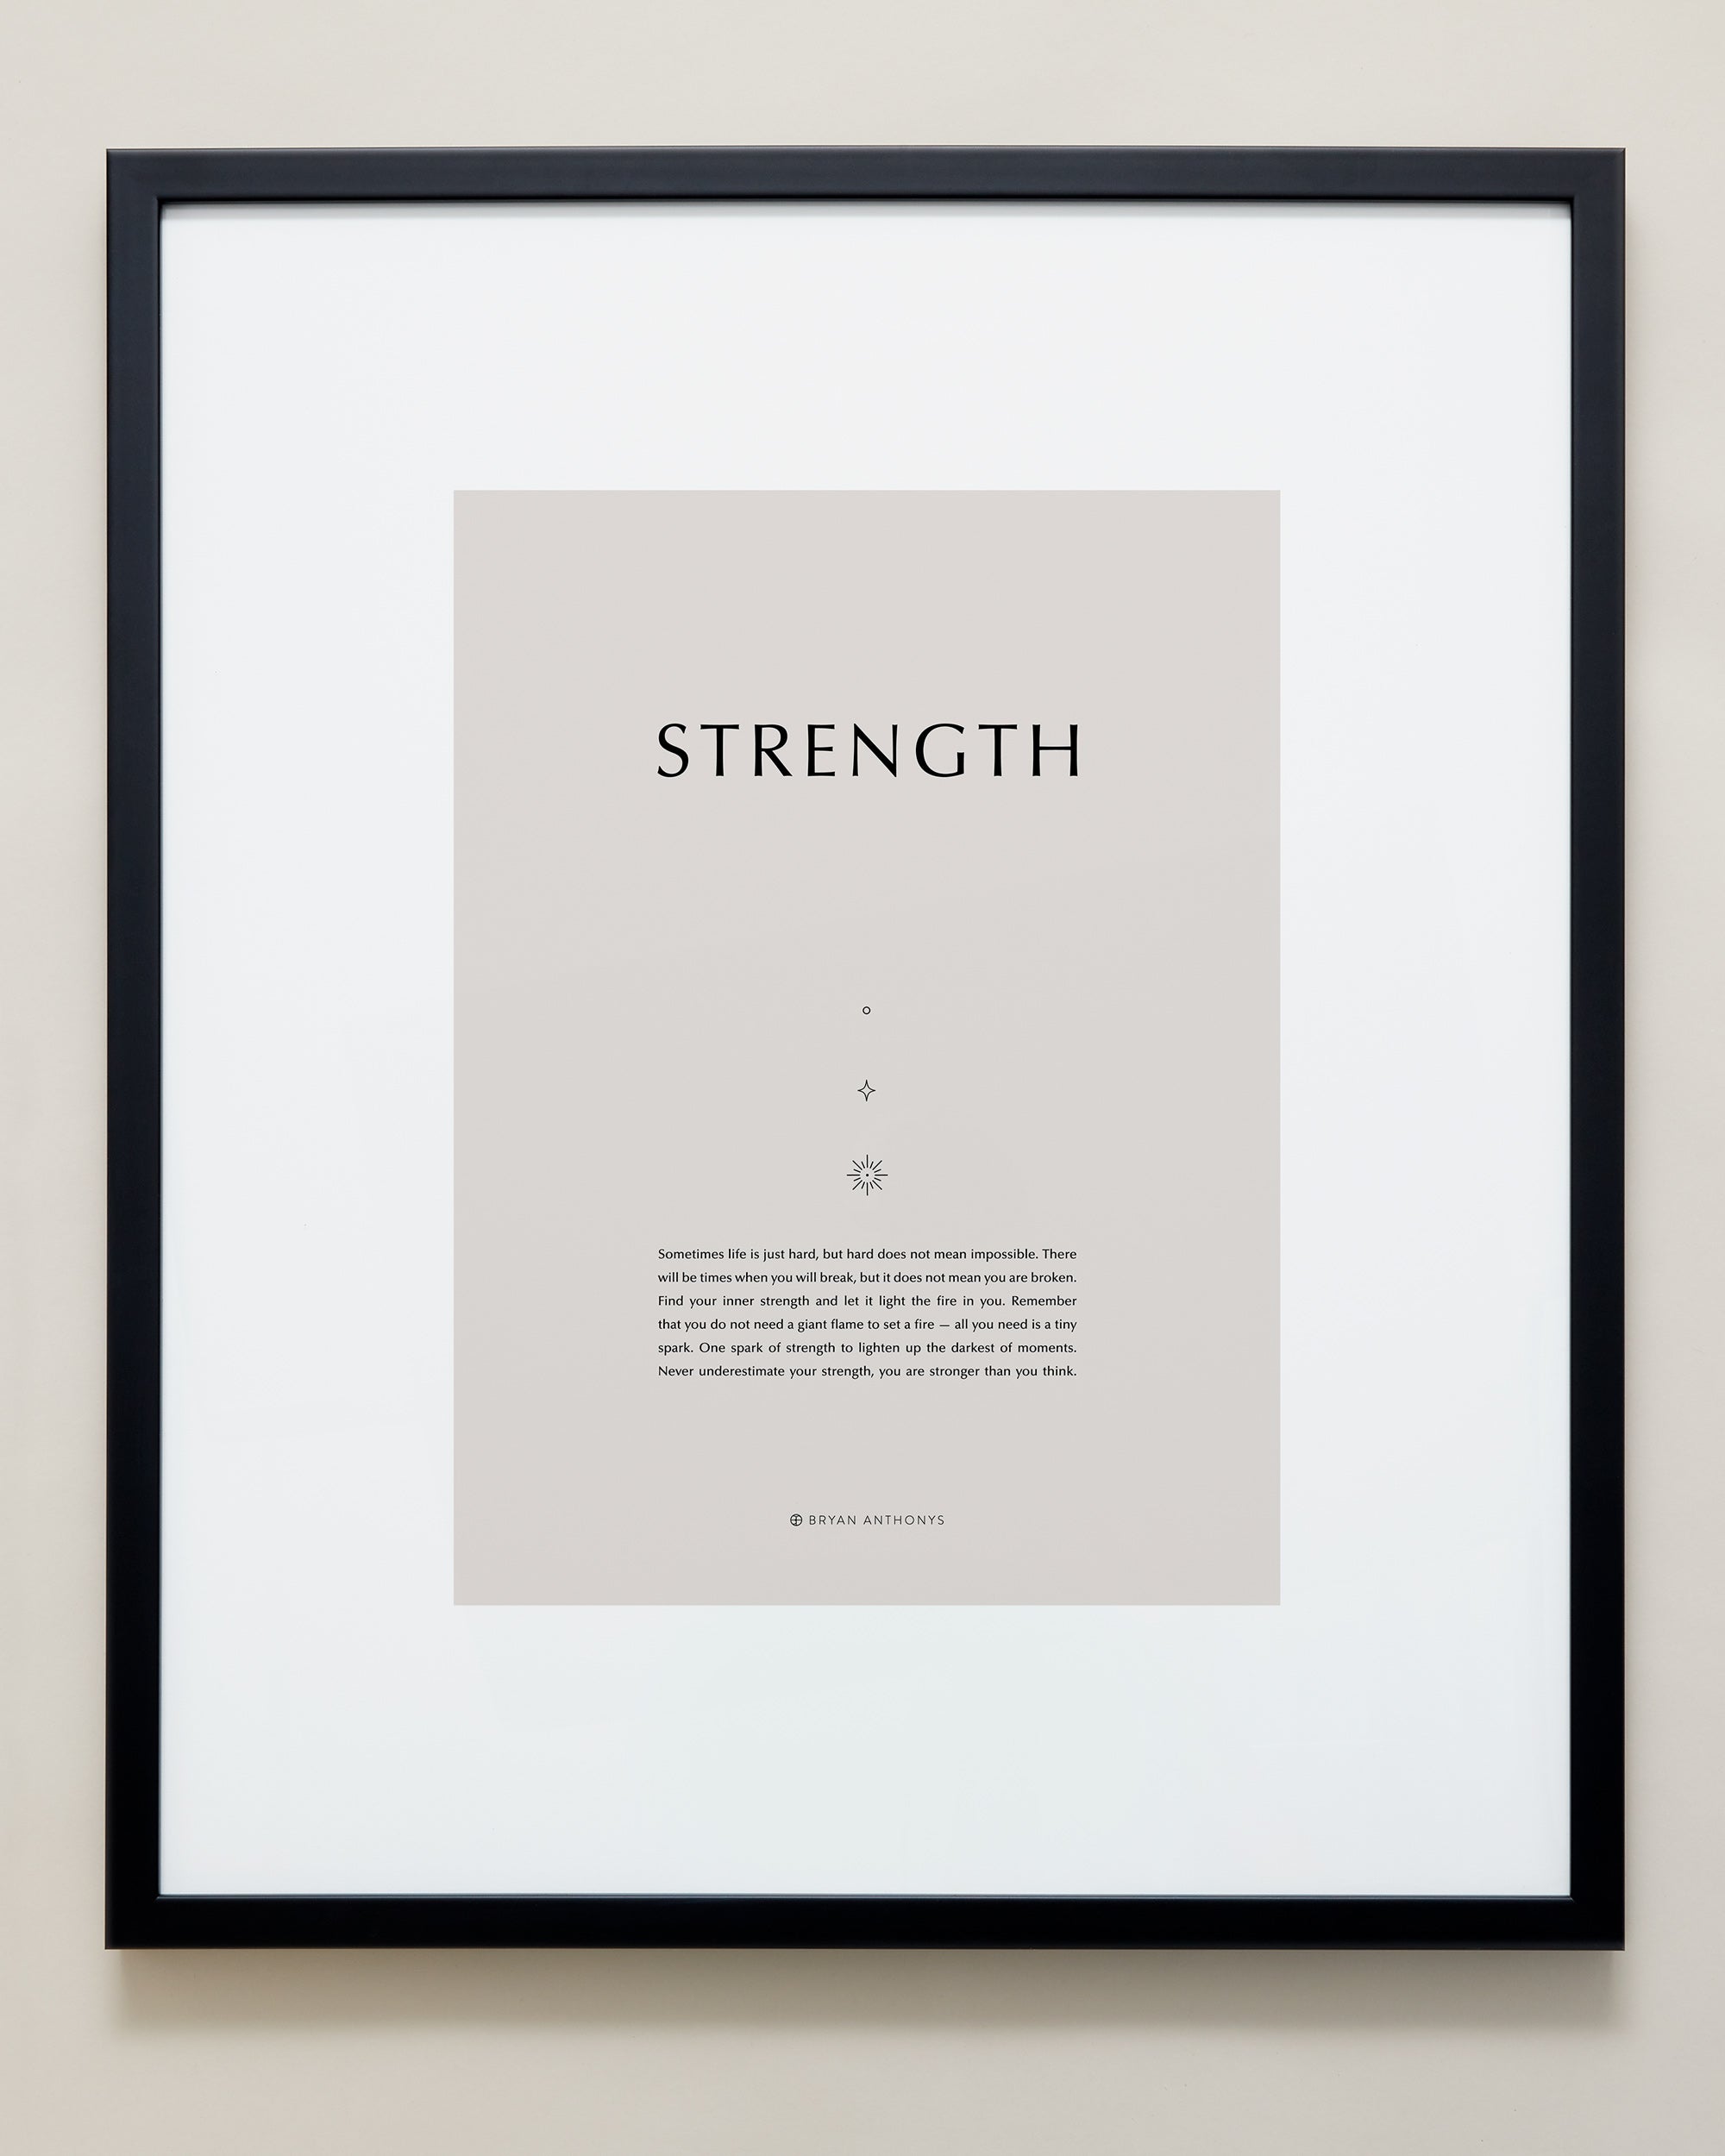 Bryan Anthonys Home Decor Purposeful Prints Strength Iconic Framed Print Tan Art With Black Frame 20x24